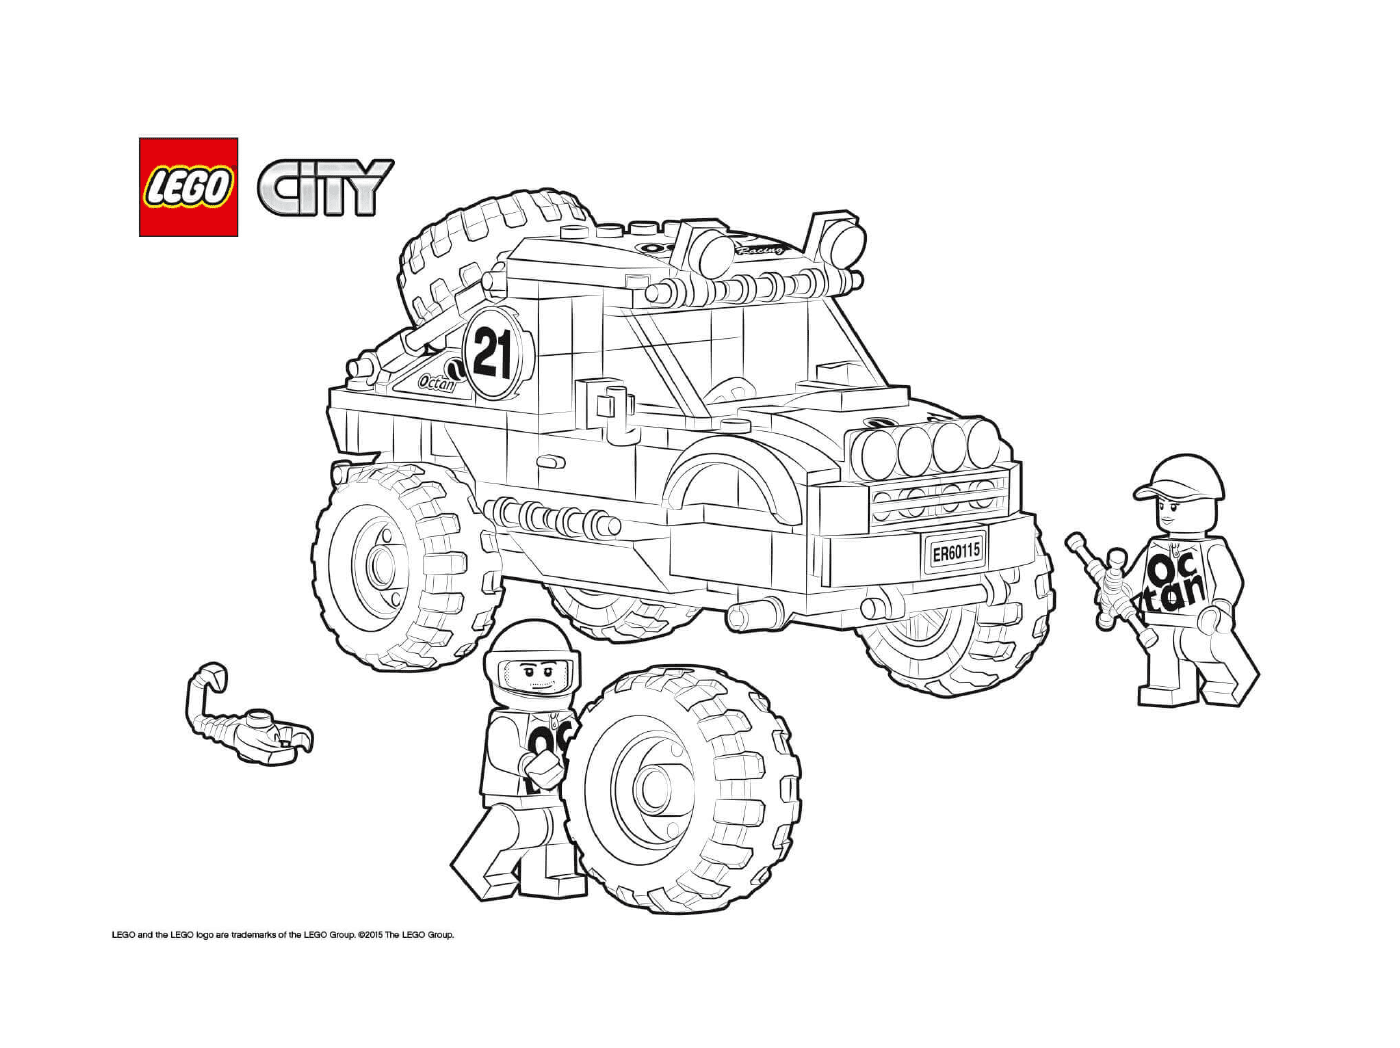  4x4 सभी लेगो शहर 